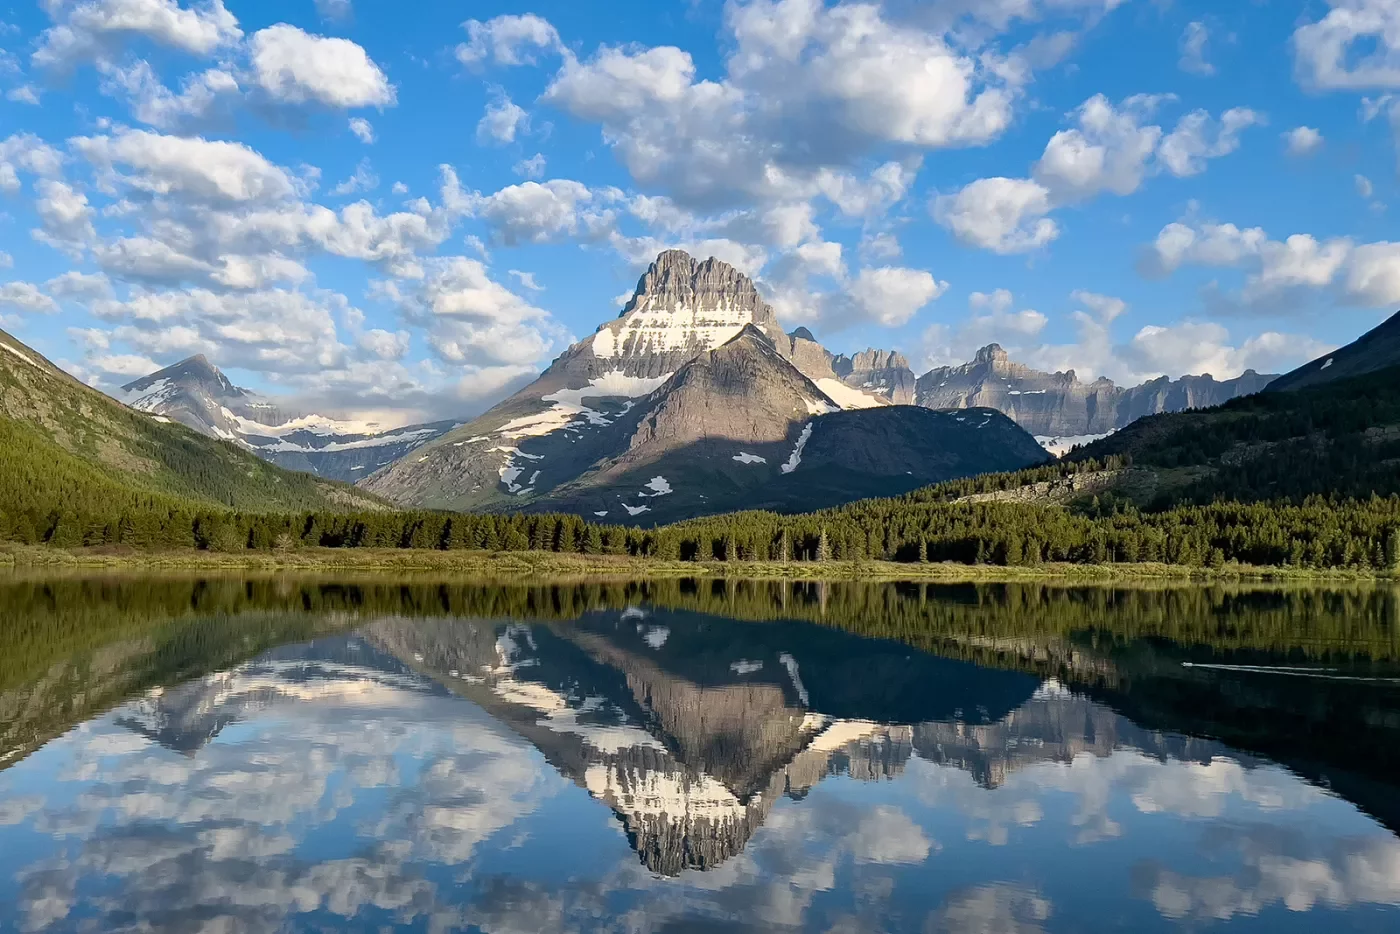 Mountain reflected onto mirrored lake